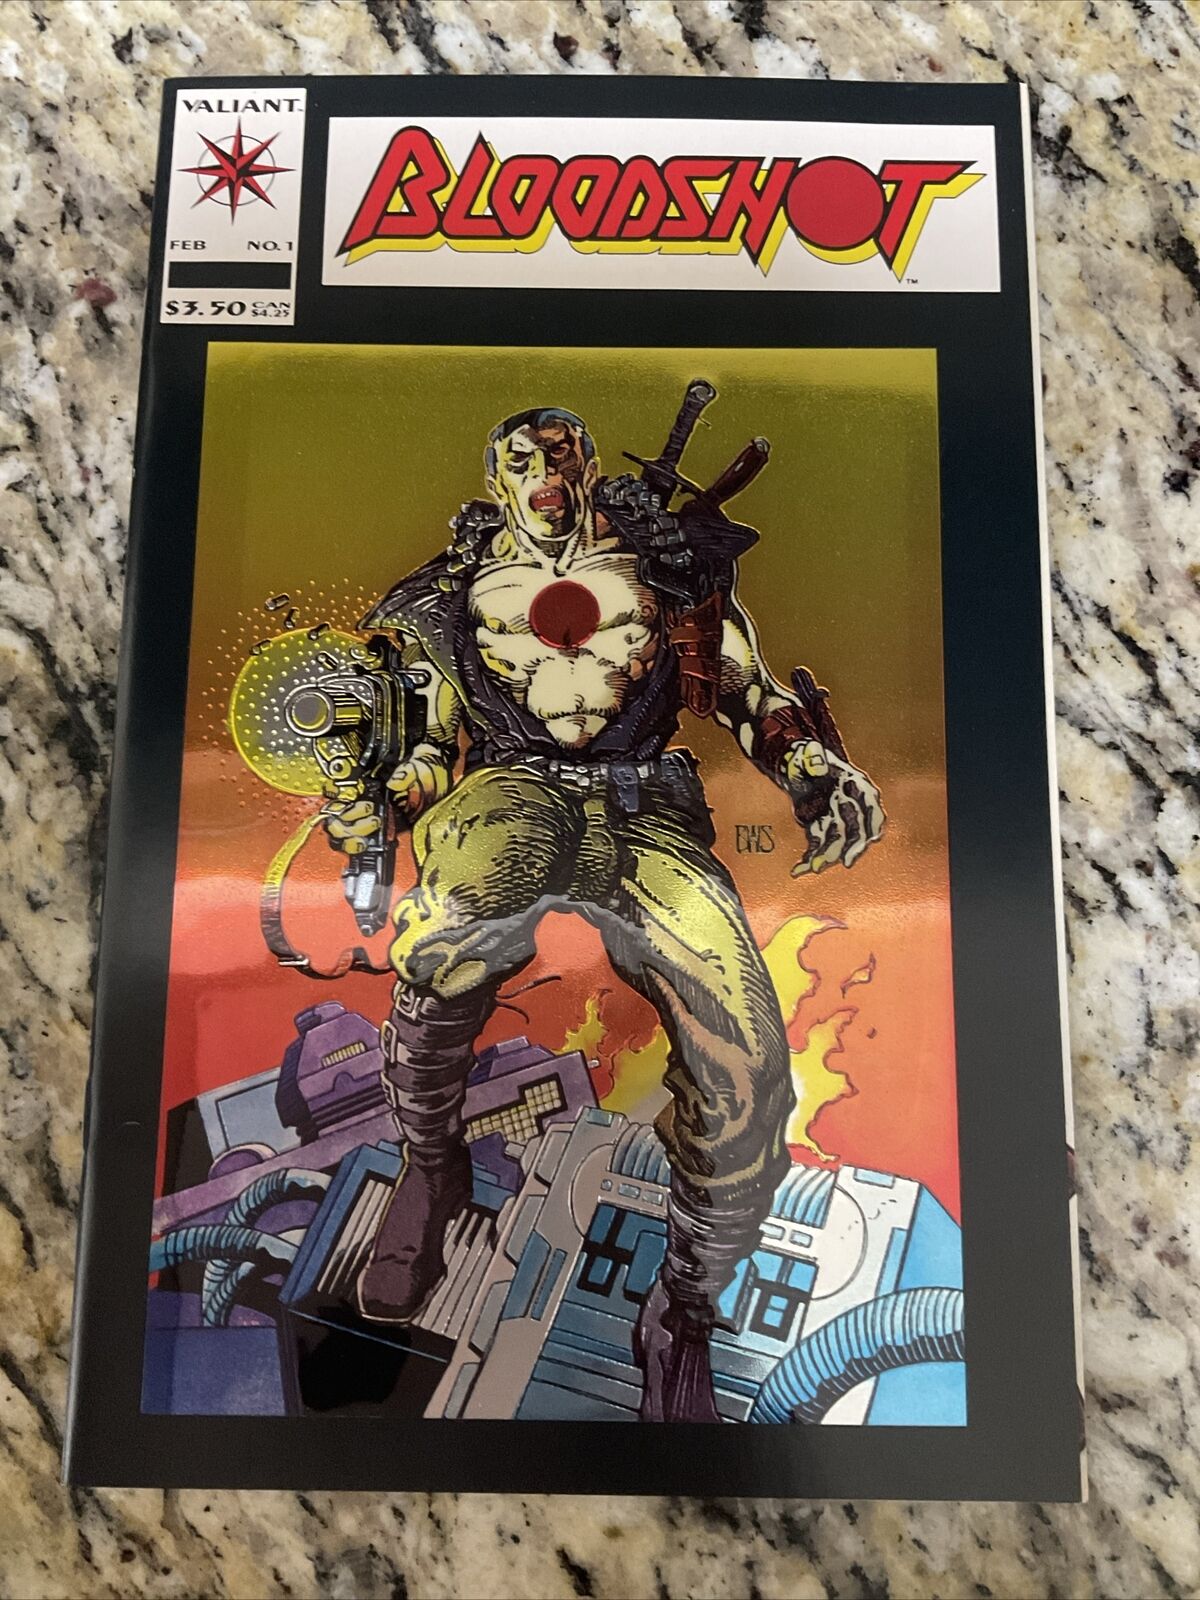 Bloodshot #1 1993 1st Solo Valiant Comic Book VF